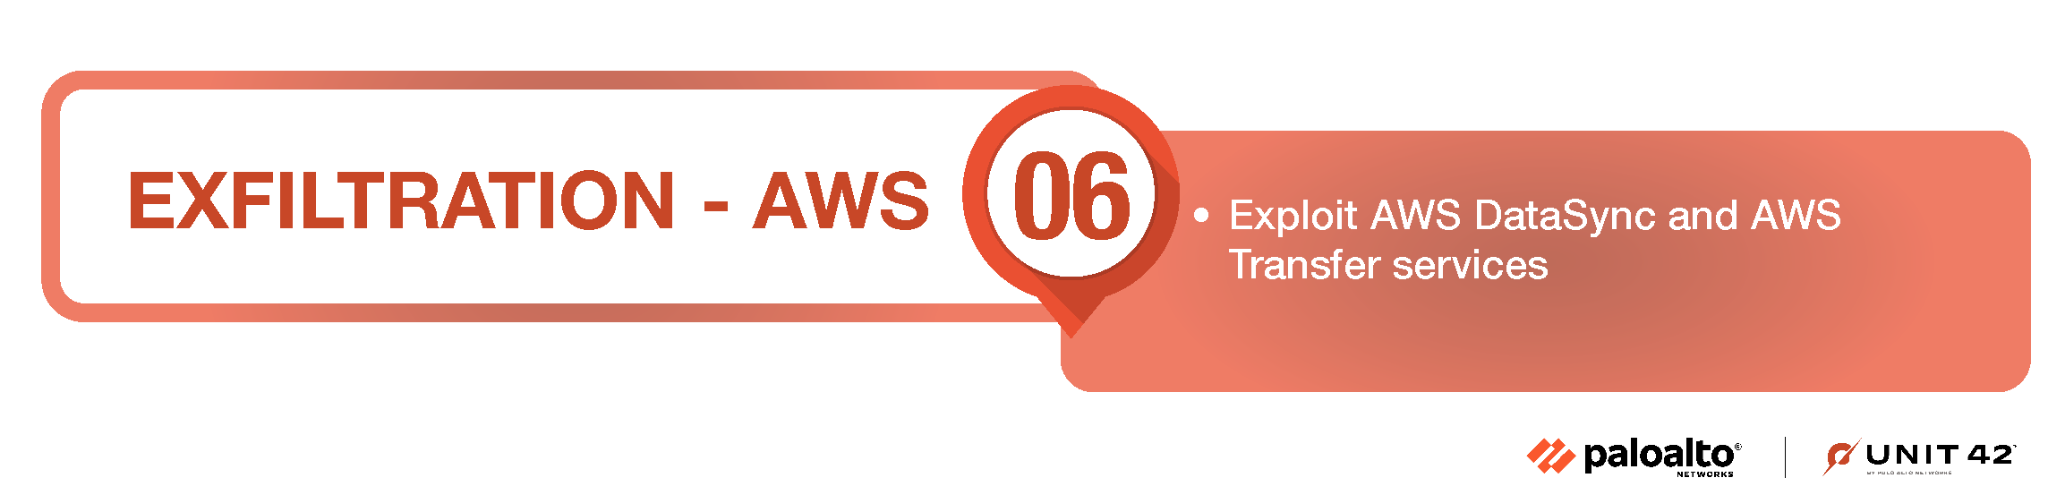 Image 7. Exfiltration – AWS. Exploit AWS DataSync and AWS transfer services.